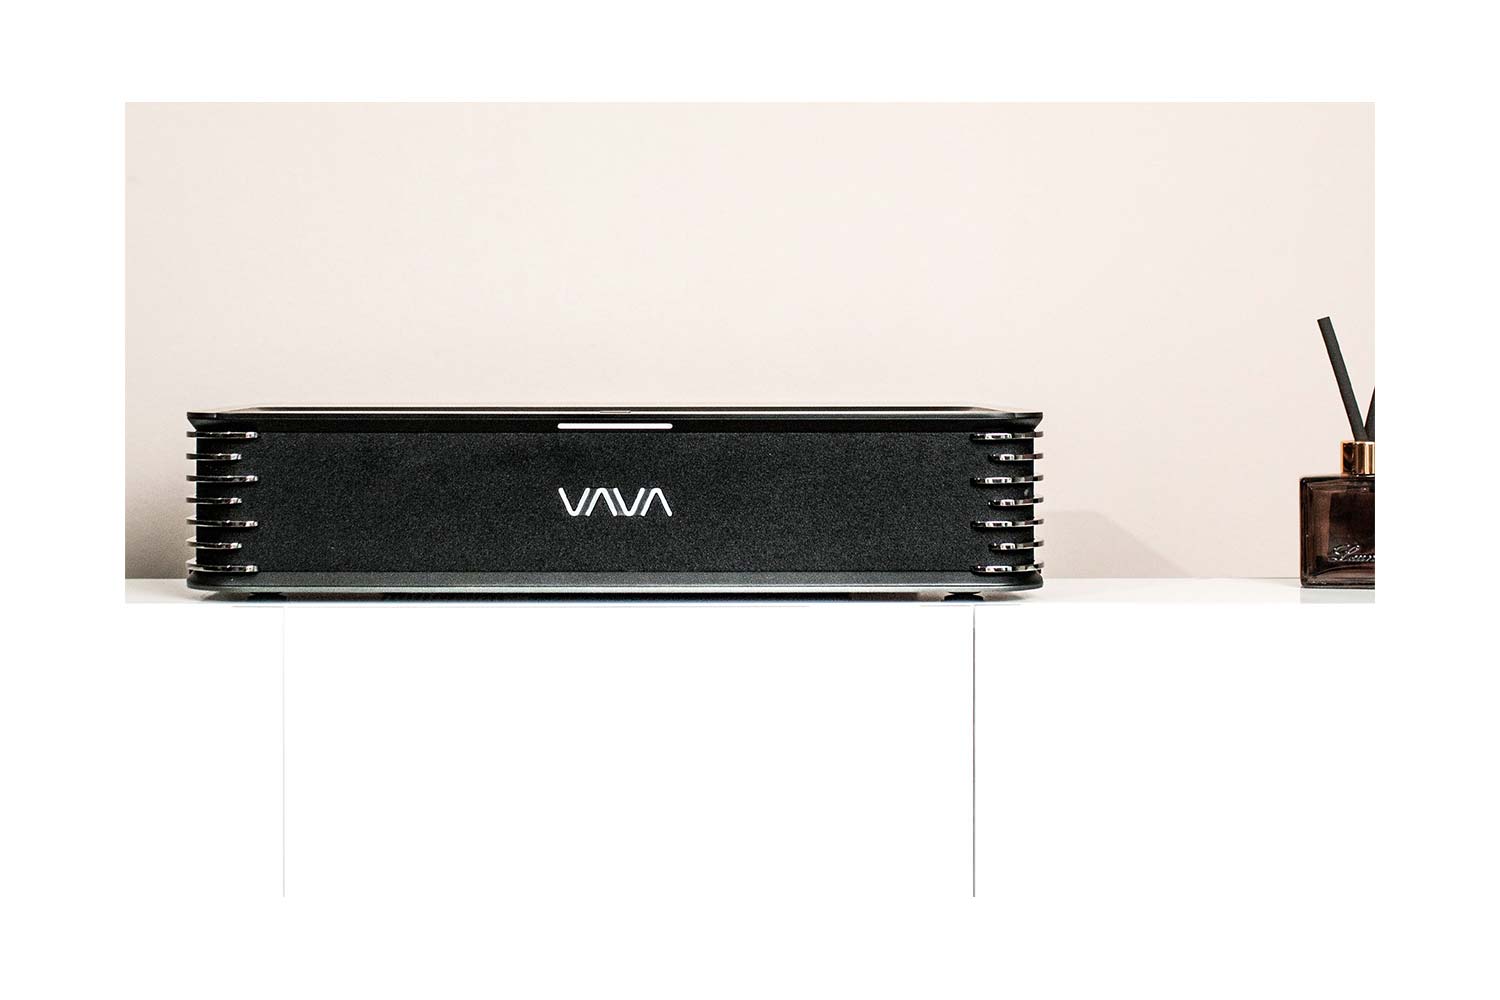 VAVA Chroma 4K UHD RGB Laser TV Beamer - HEIMKINORAUM Edition